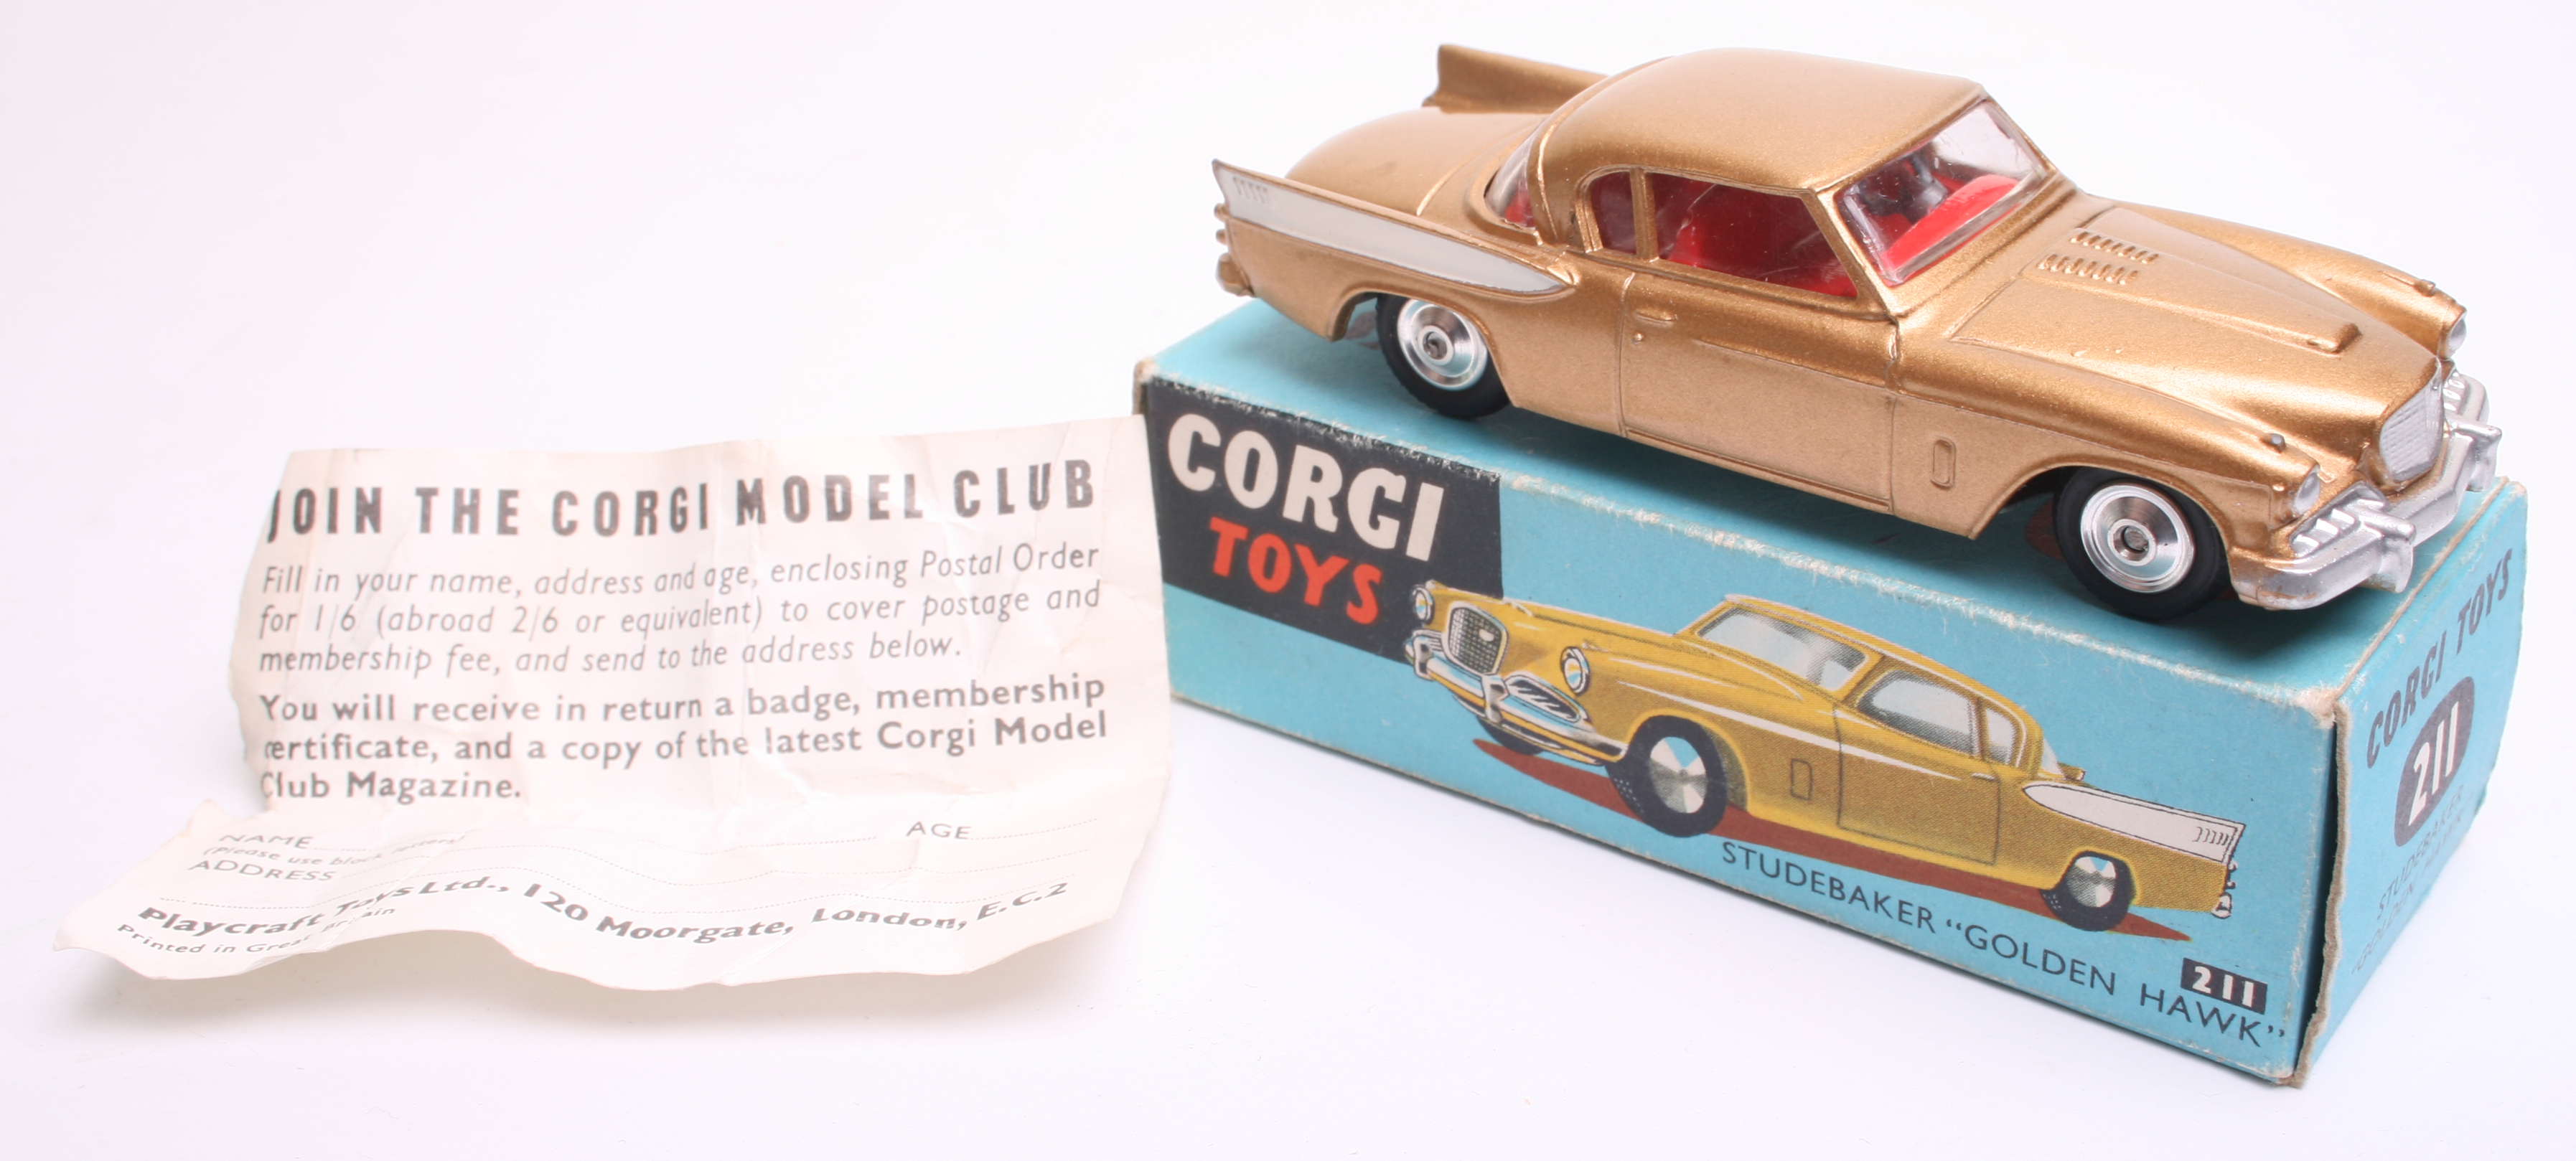 Corgi Toys 211S Studebaker “Golden Hawk” gold body/white trim, spun wheels, in near mint condition